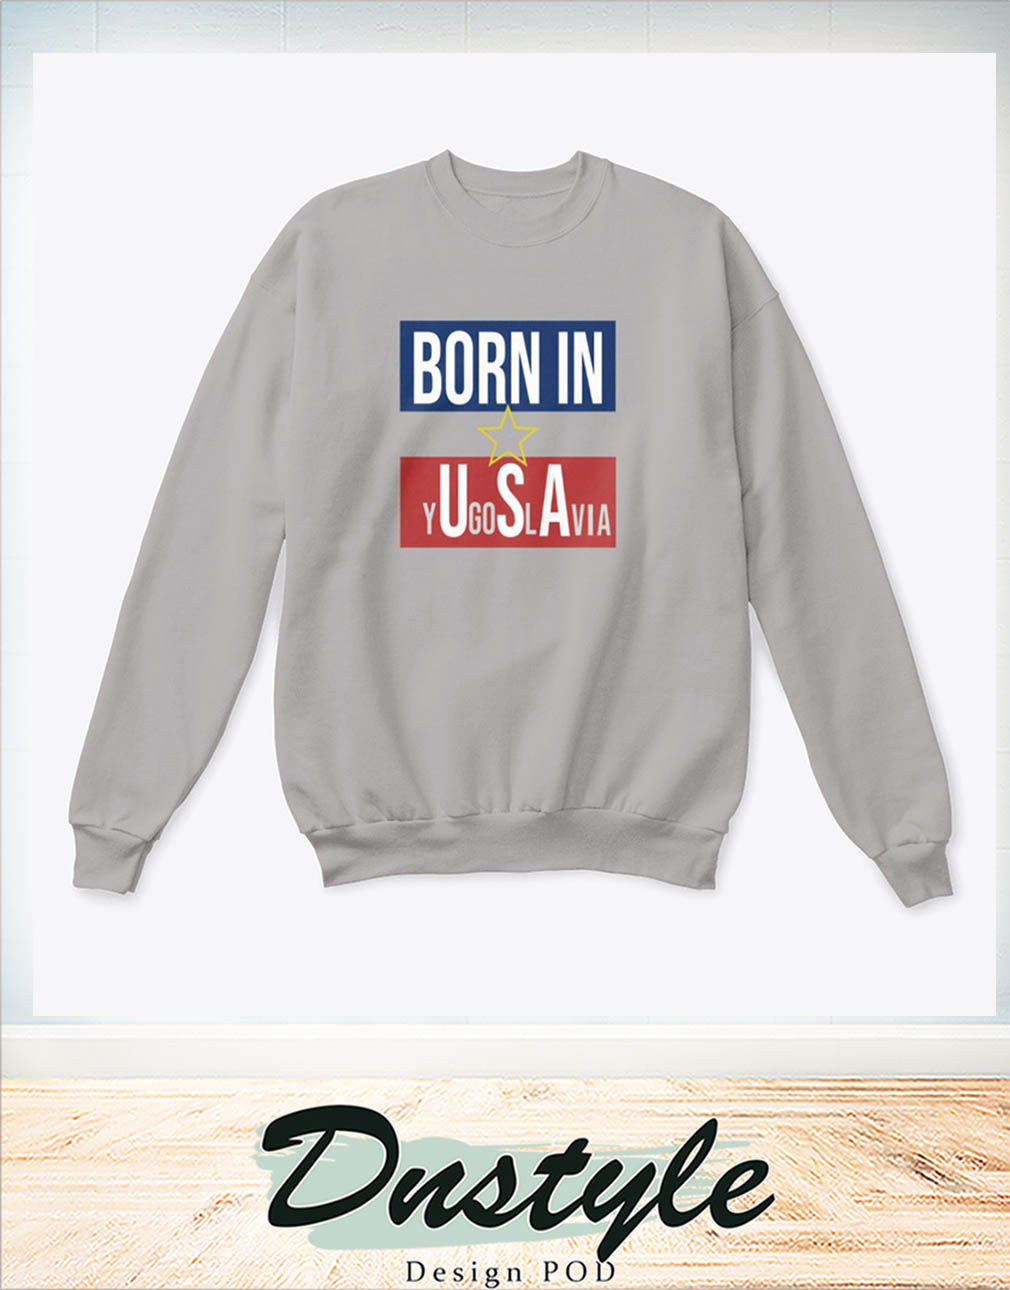 Born in YU-GI-OH-SLAVIA sweatshirt